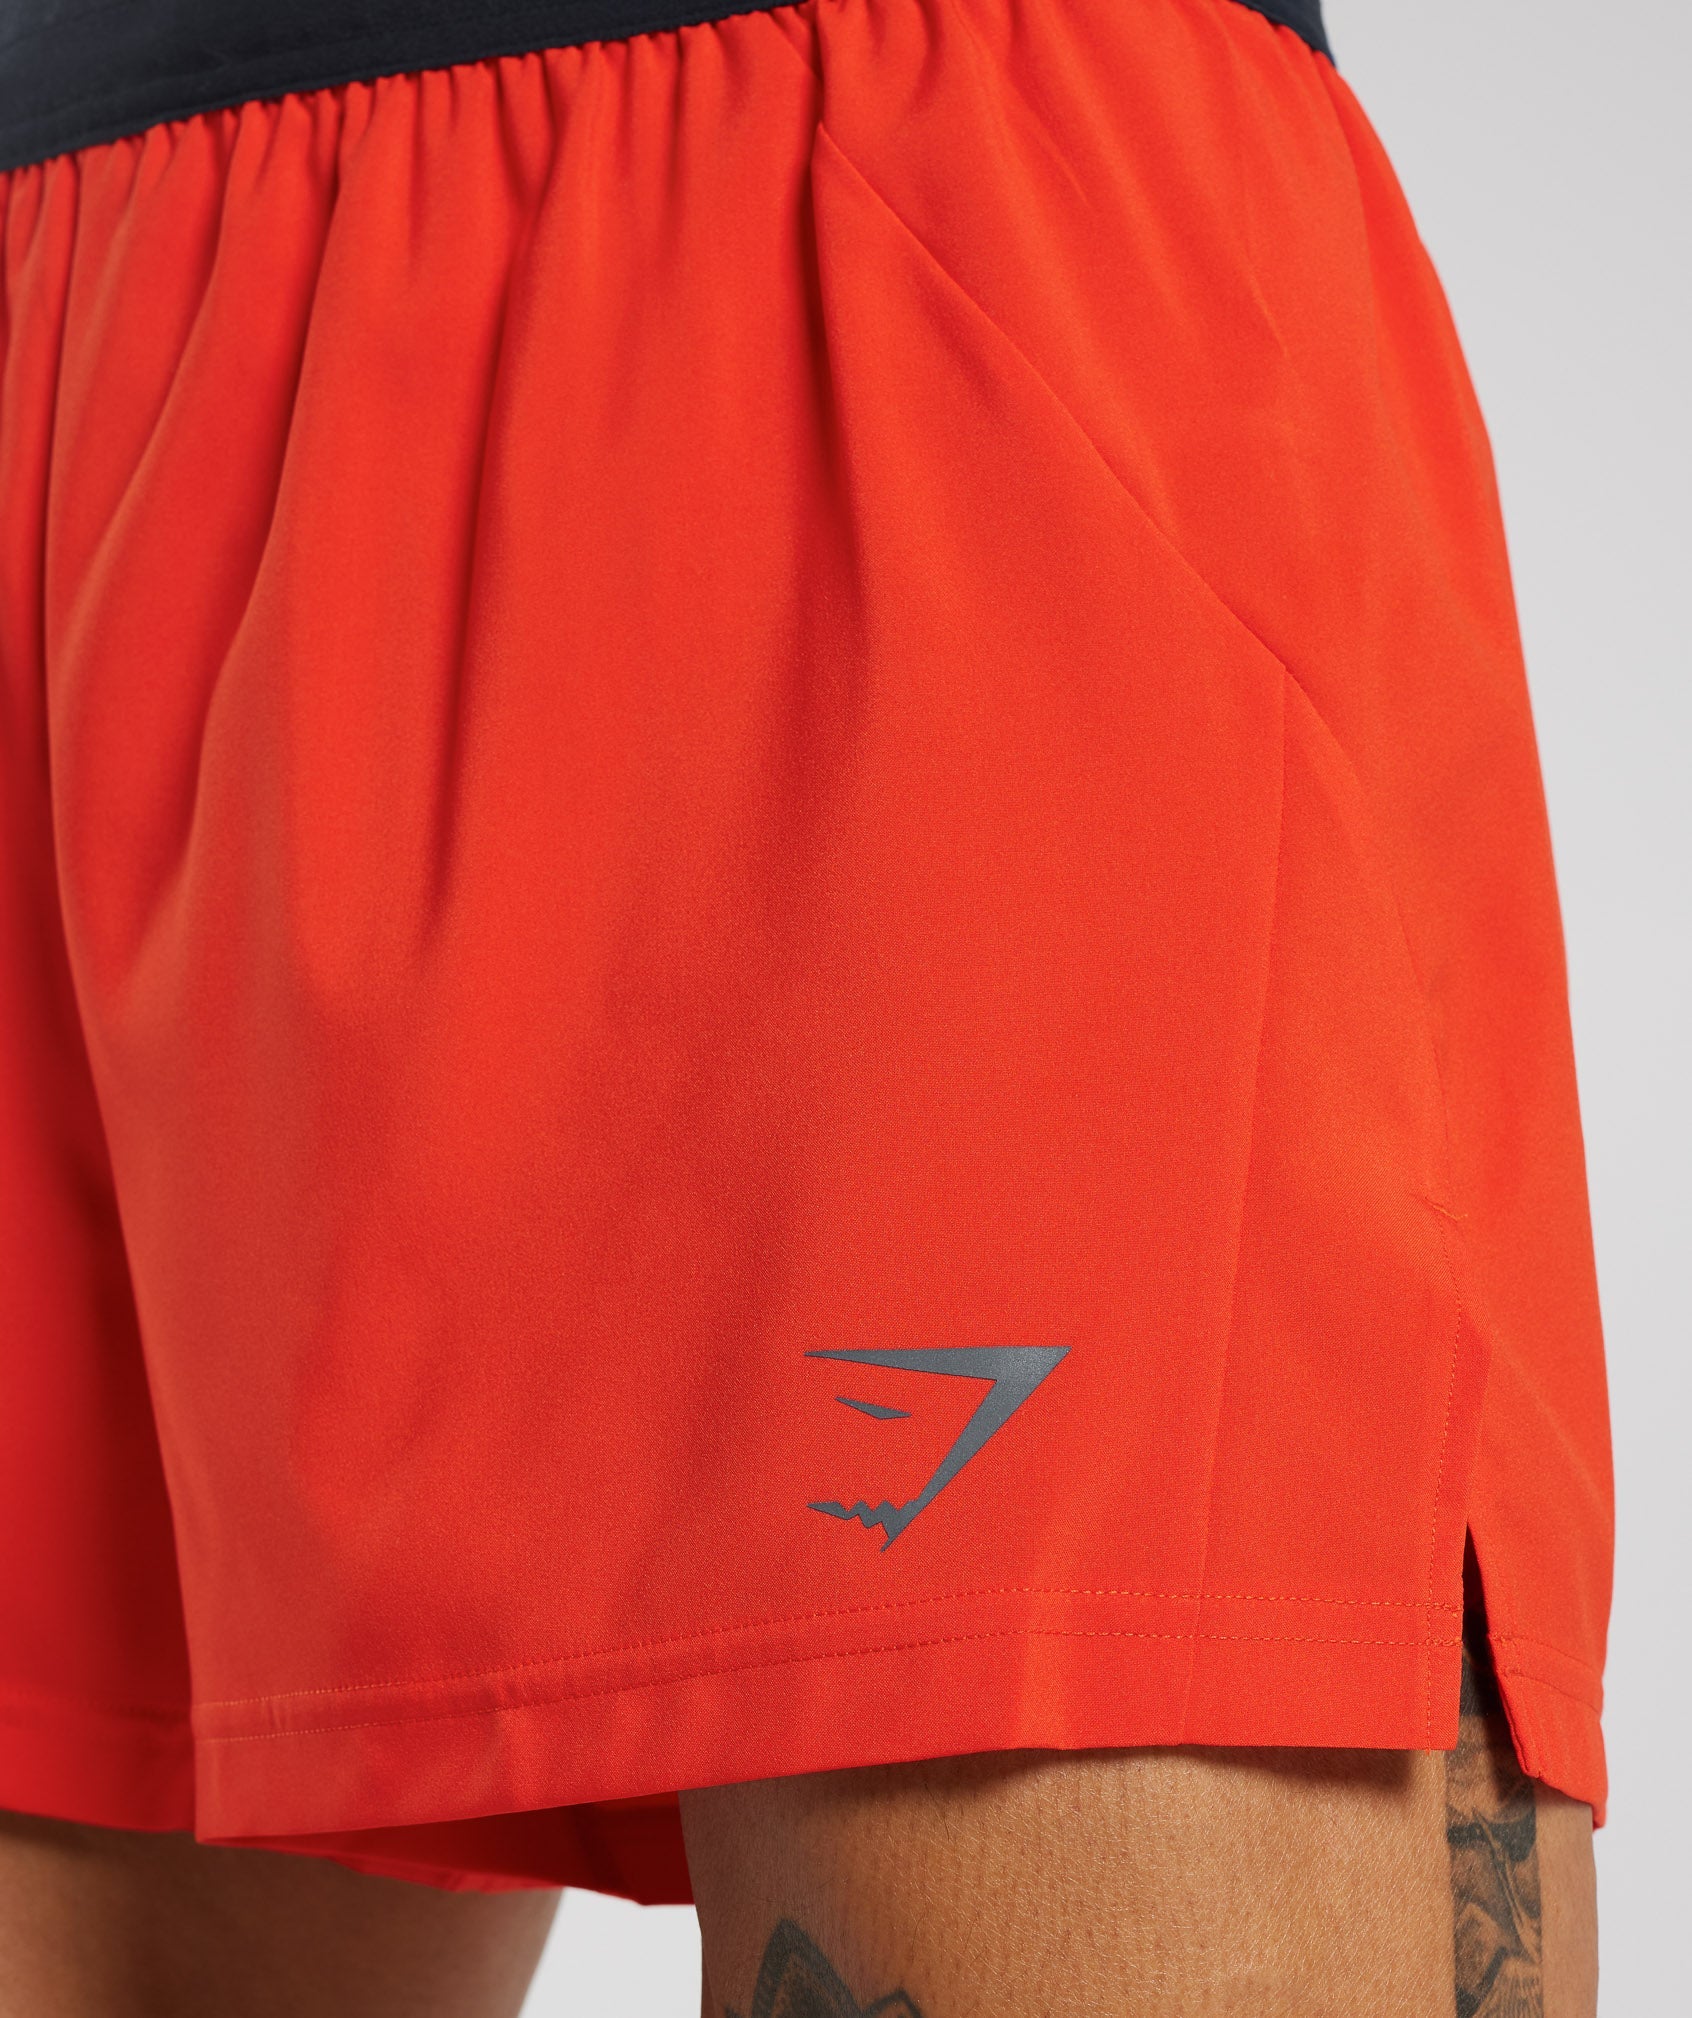 Sport Run 3" Shorts in Electric Orange - view 5